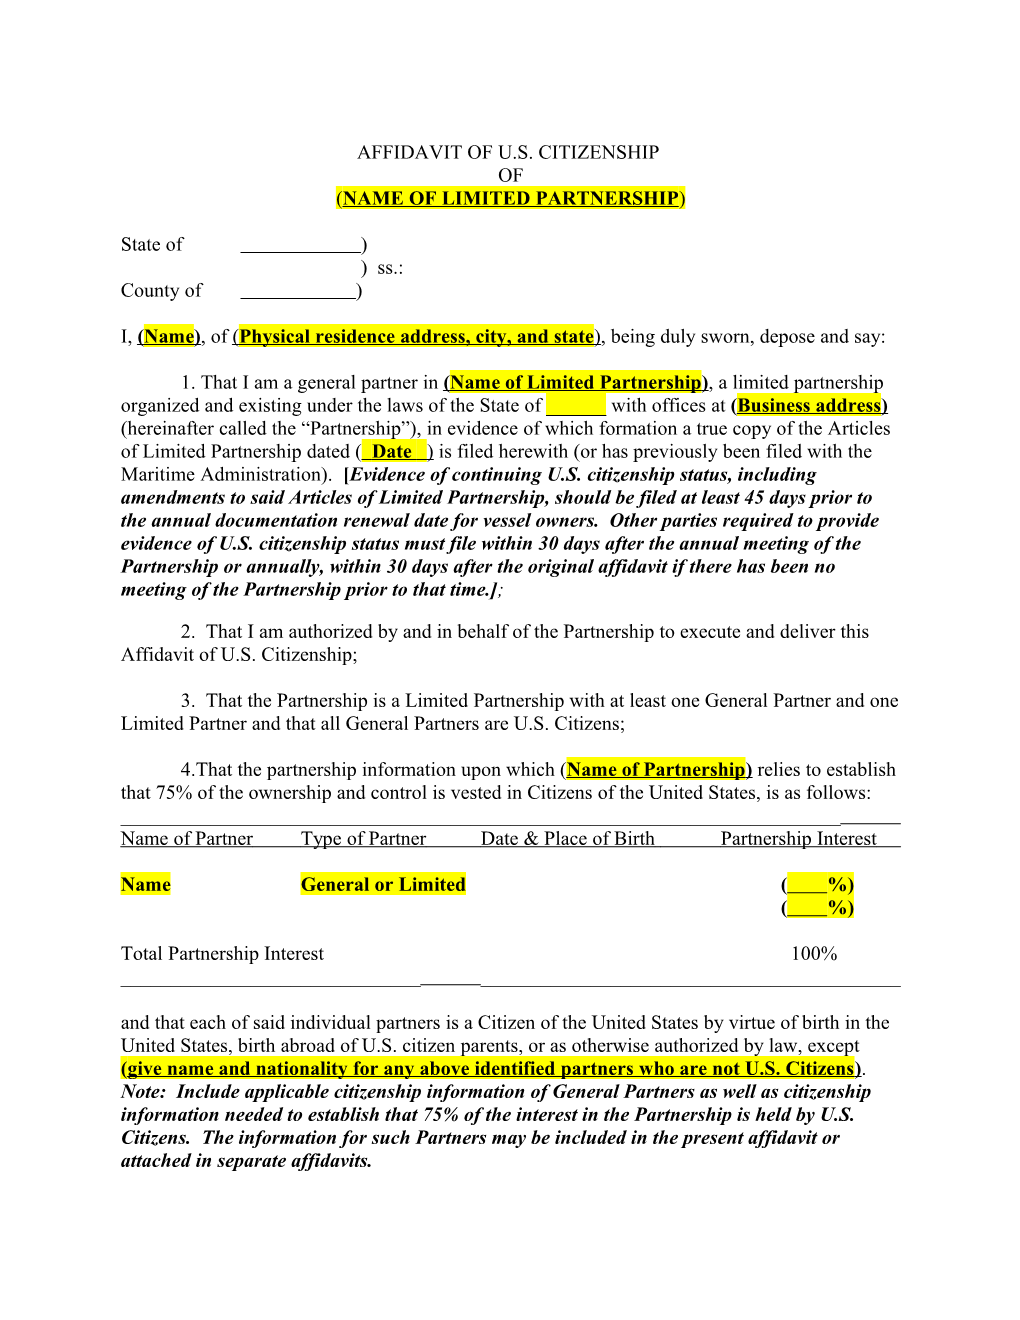 Affidavit of U.S. Citizenship